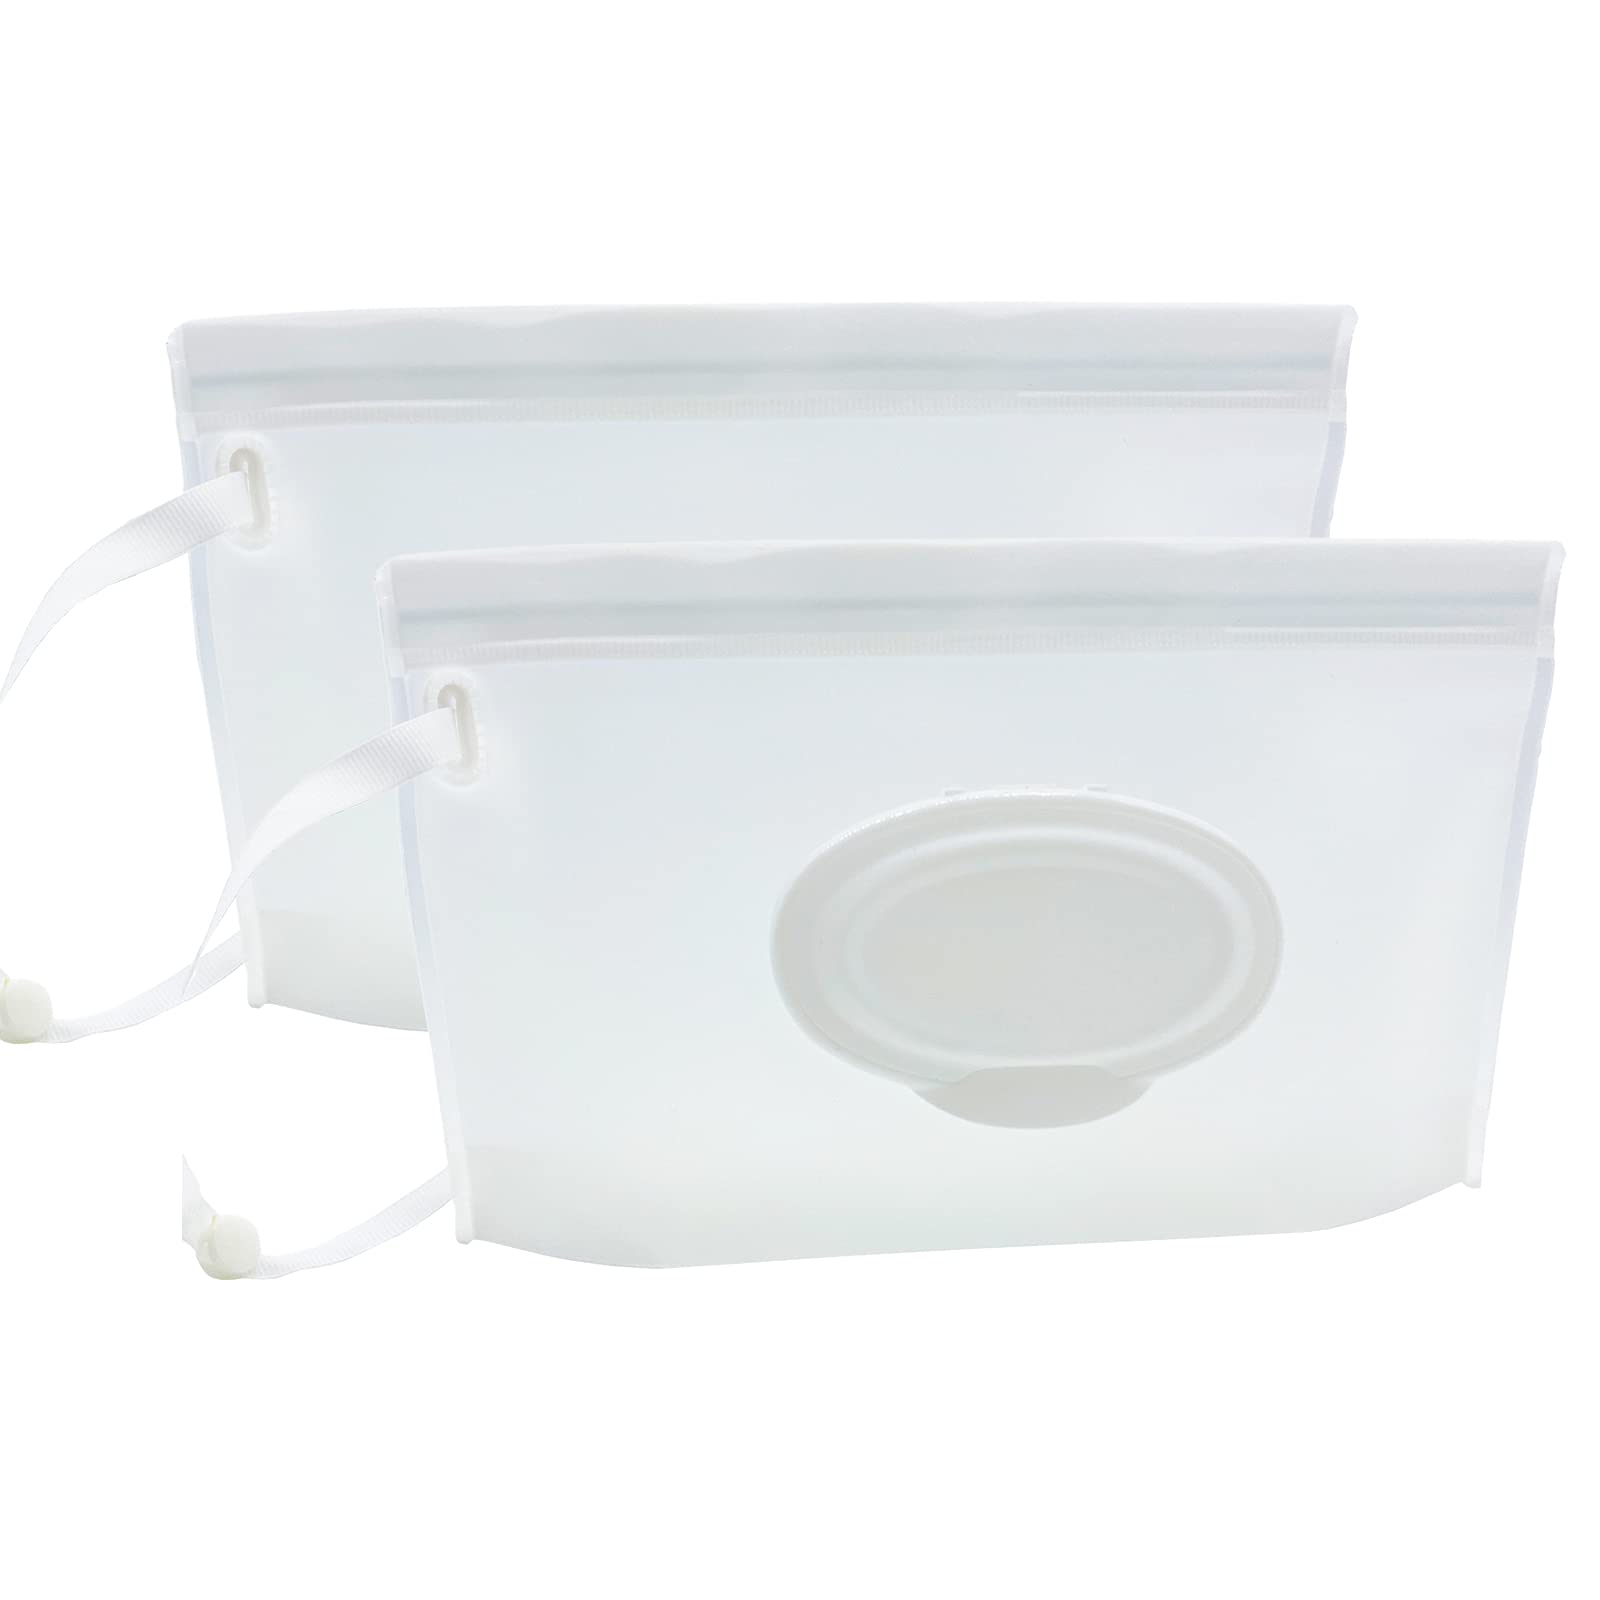 ULVBABI Portable Wet Wipe Pouch Dispenser, Reusable Baby Diaper Disposal Bags, Refillable Personal Travel Clutch Dispenser Holder | Keeps Wet Wipes Moist (Transparent Style, 2 Pack)